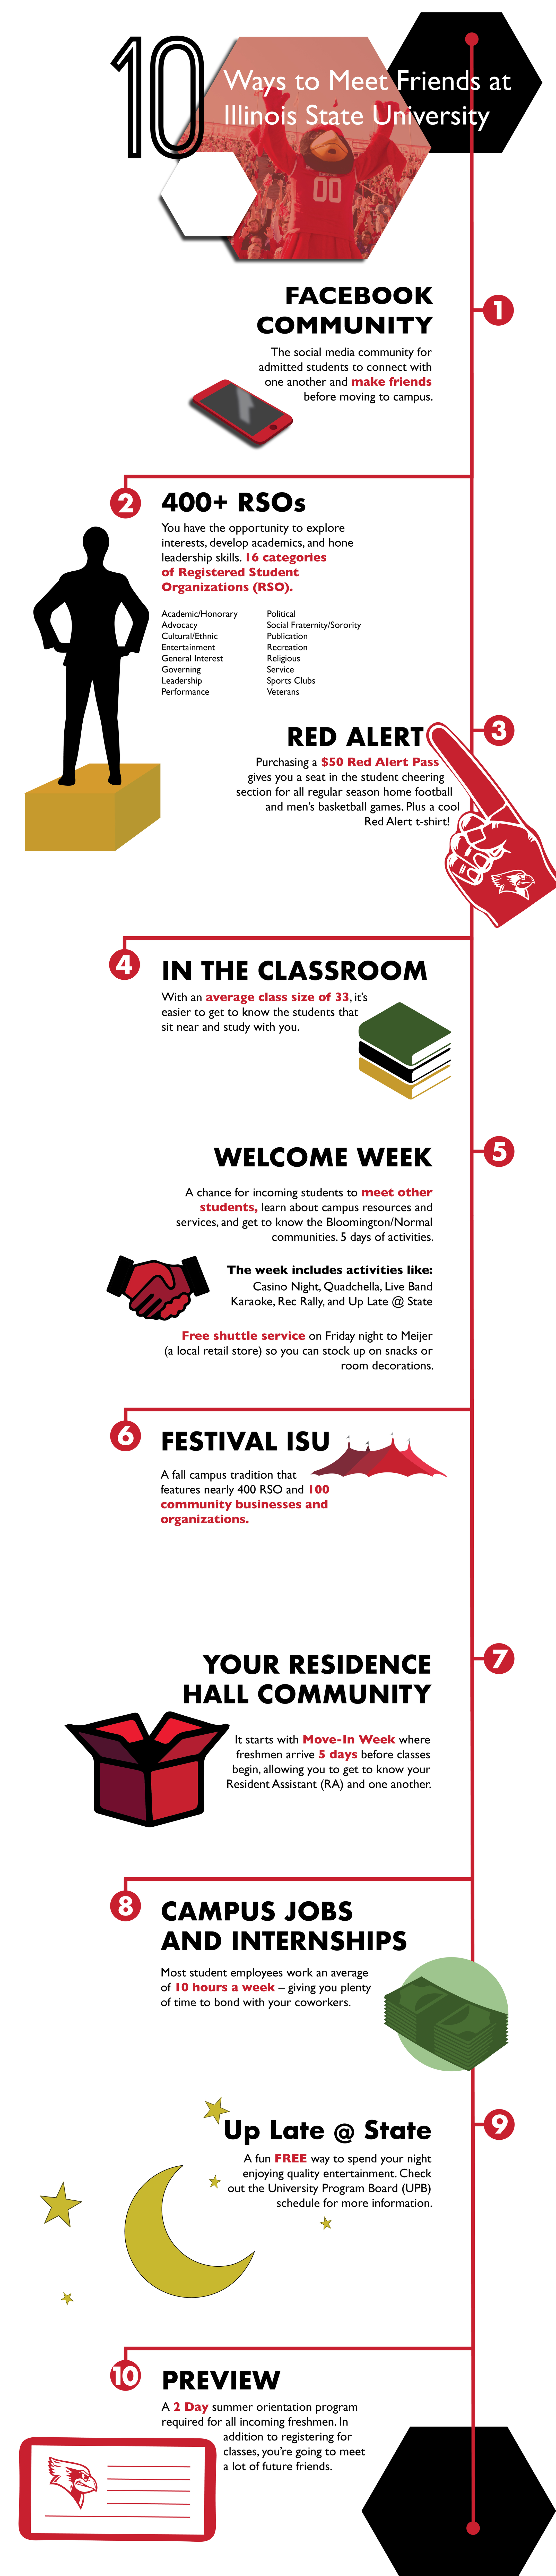 10 Ways to Make Friends at ISU infographic